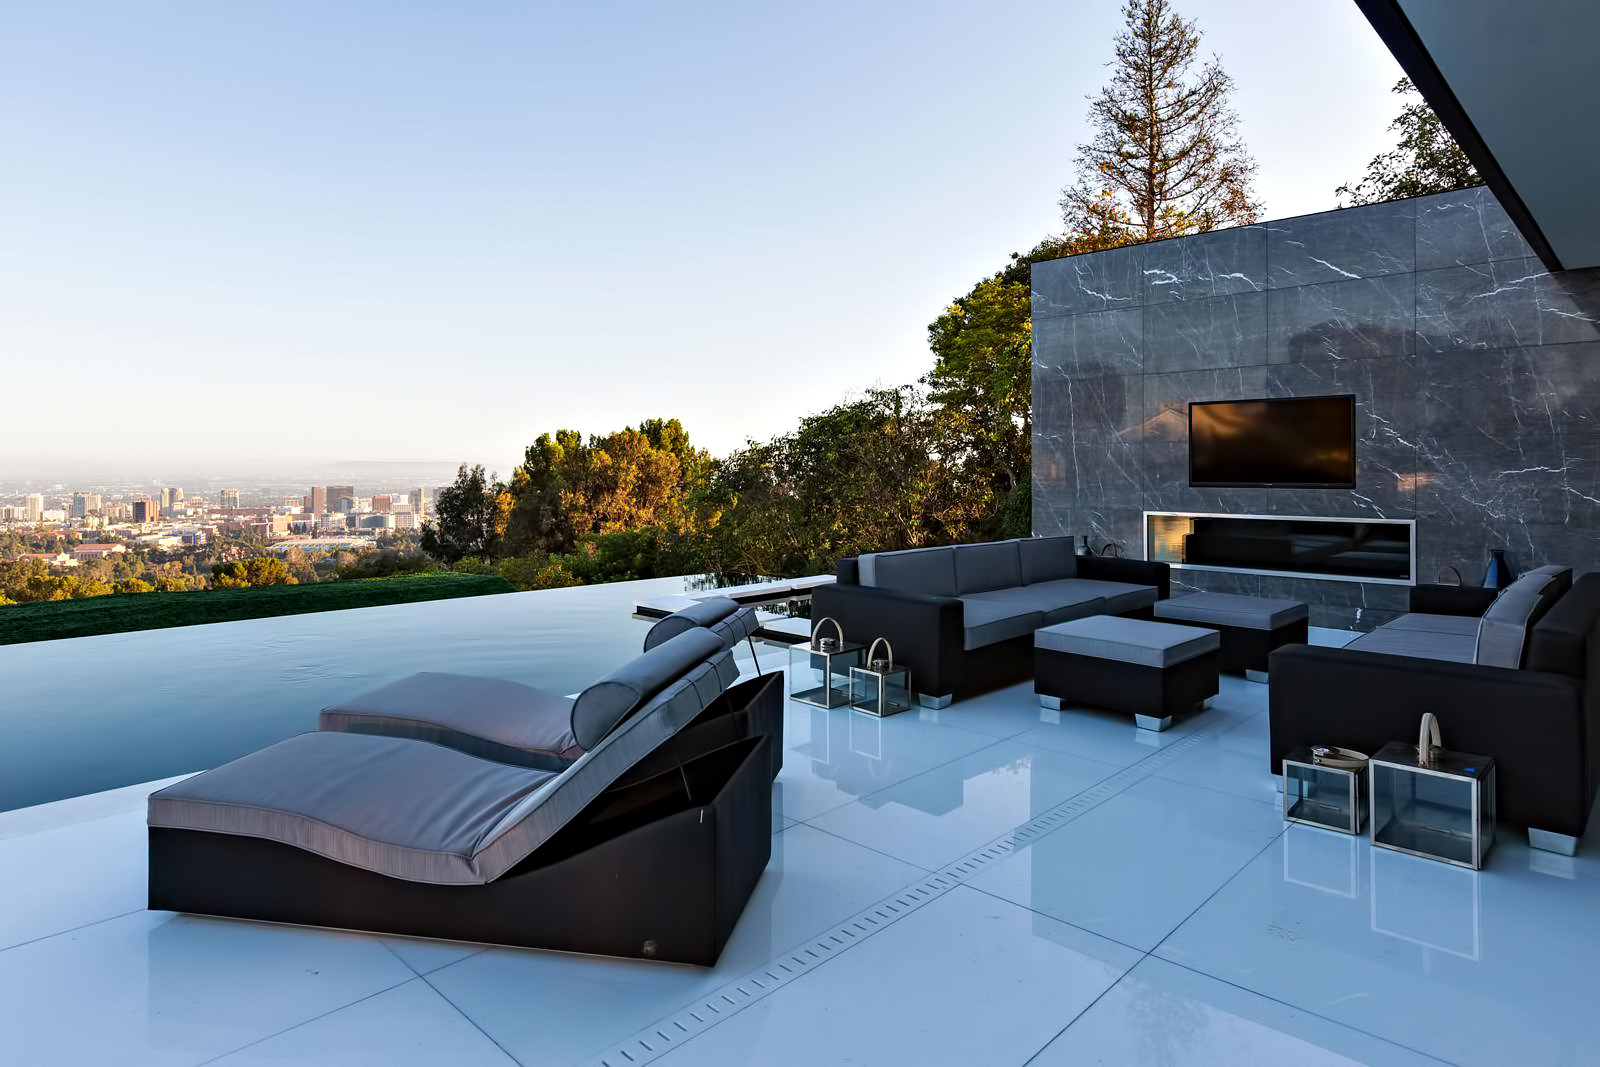 Bel Air Luxury Modern – 864 Stradella Road, Los Angeles, CA, USA